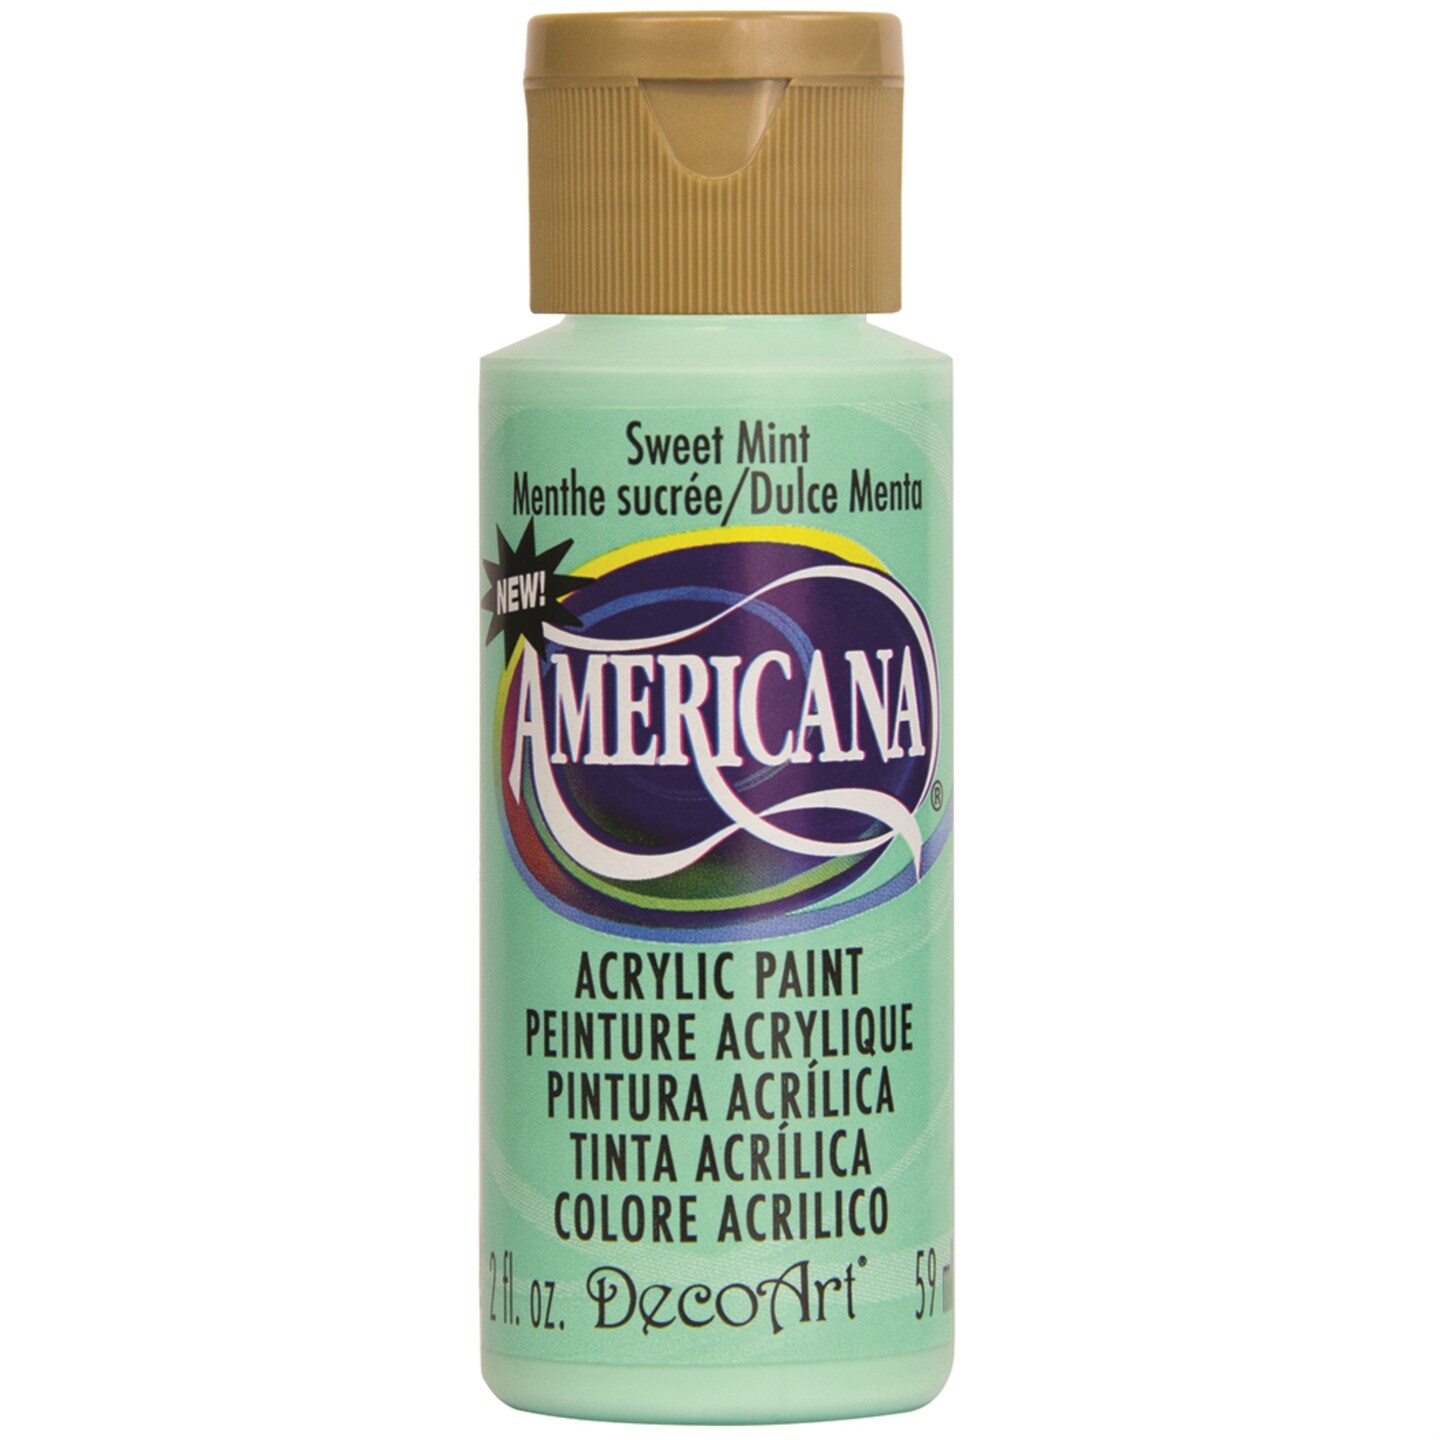 DecoArt Americana Acrylic Paint, 2-Ounce, Sweet Mint